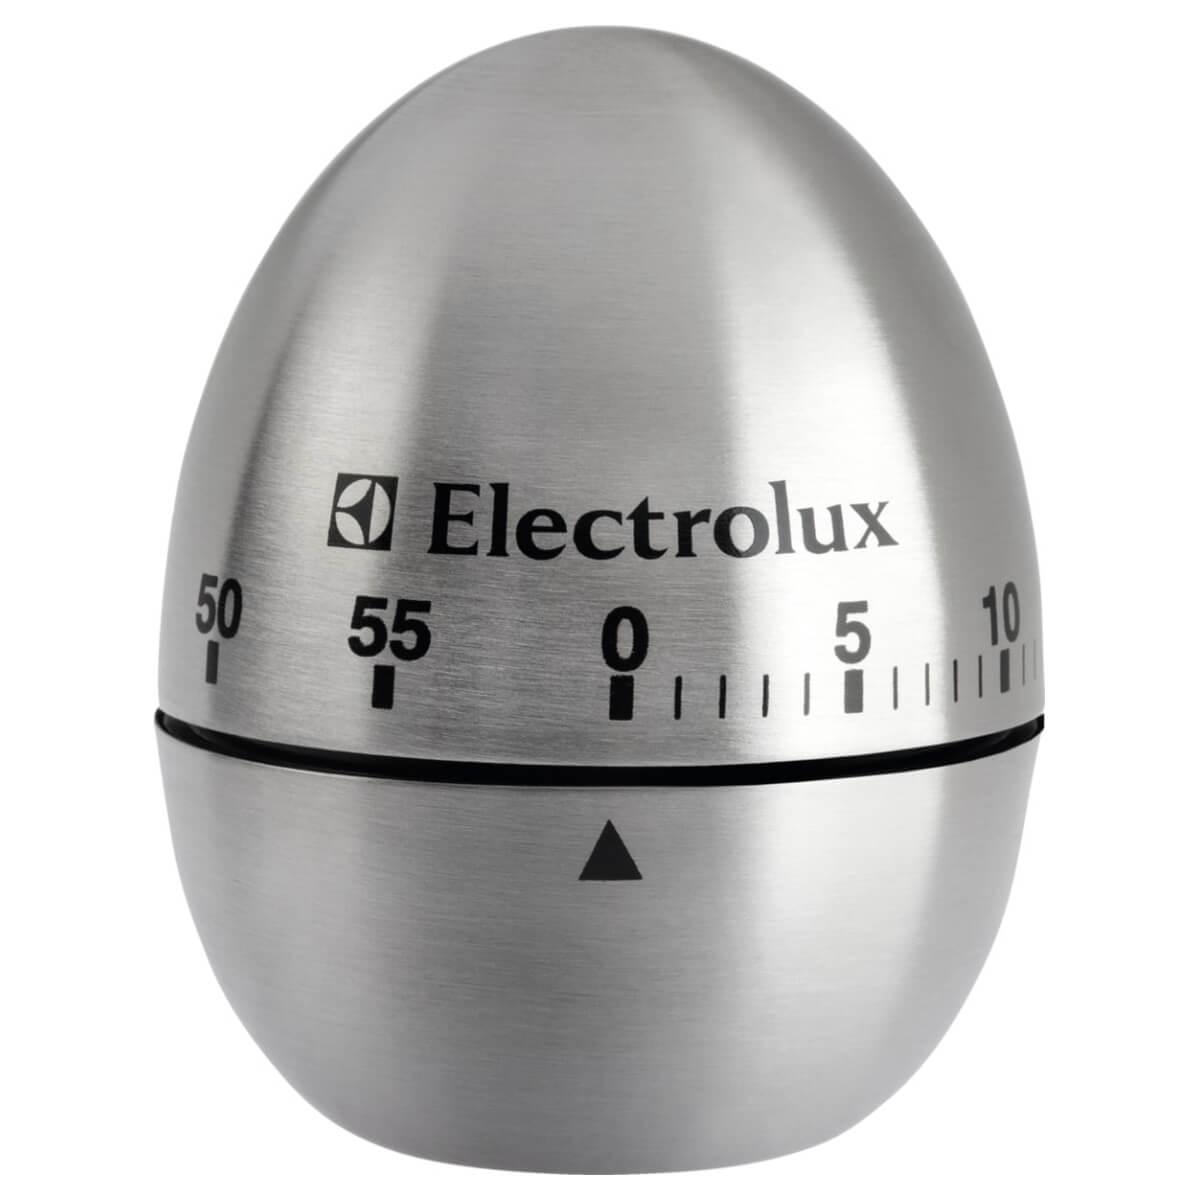 Таймер для кухни в форме яйца Electrolux E4KTAT01